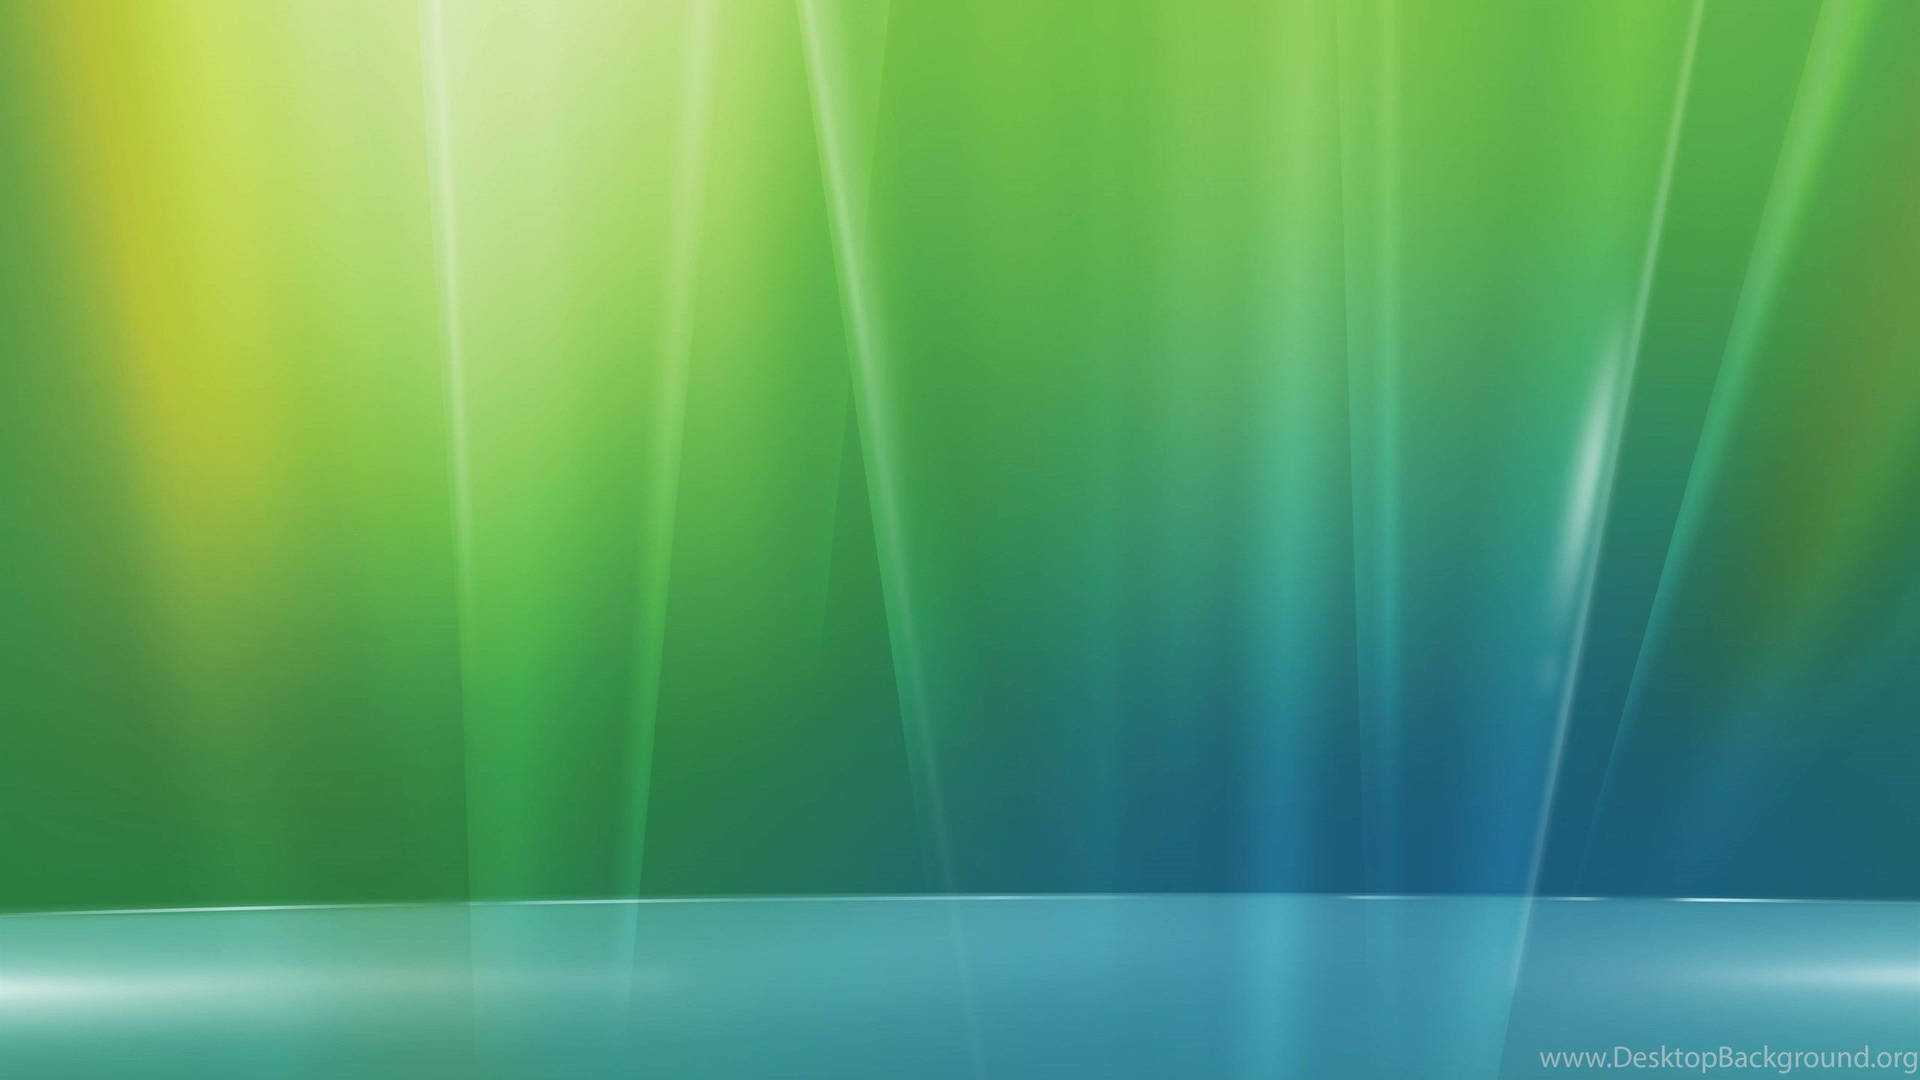 Windows Vista 2560X1440 Wallpaper and Background Image